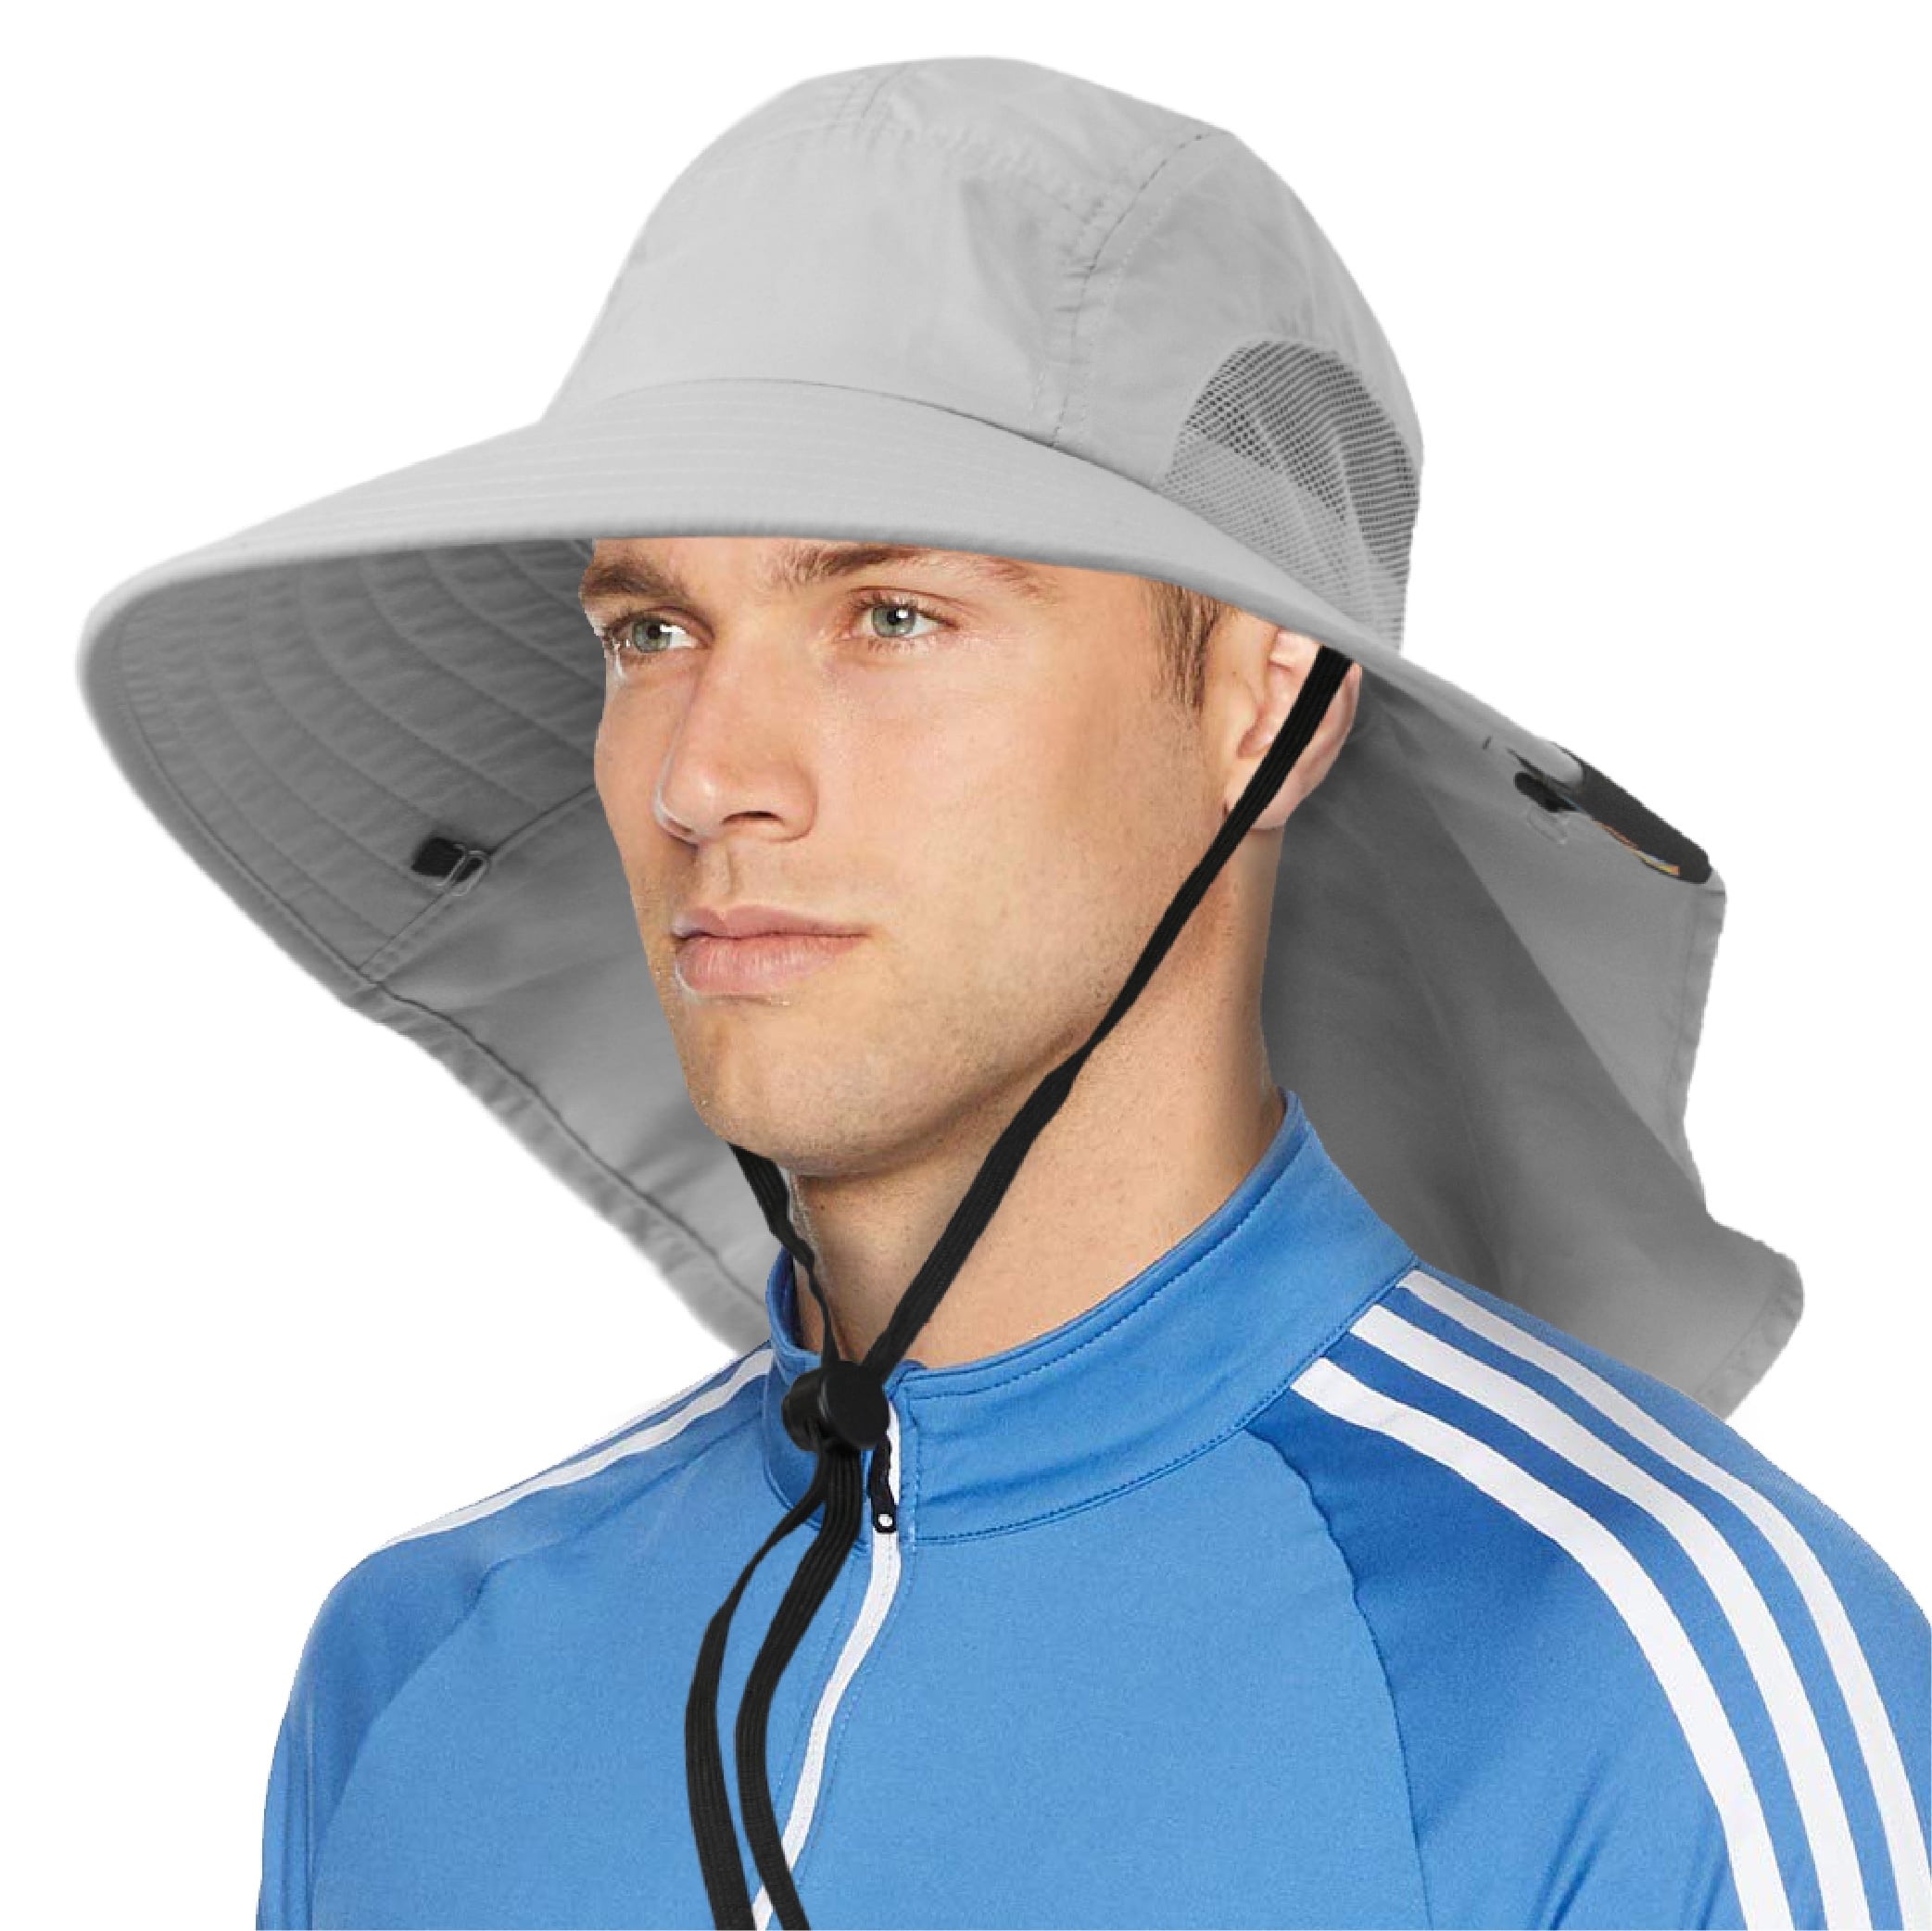 Sun Cube Wide Brim Sun Hat with Neck Flap, UPF50+ Hiking Safari Fishing Hat for Men Women, Sun Protection Beach Hat